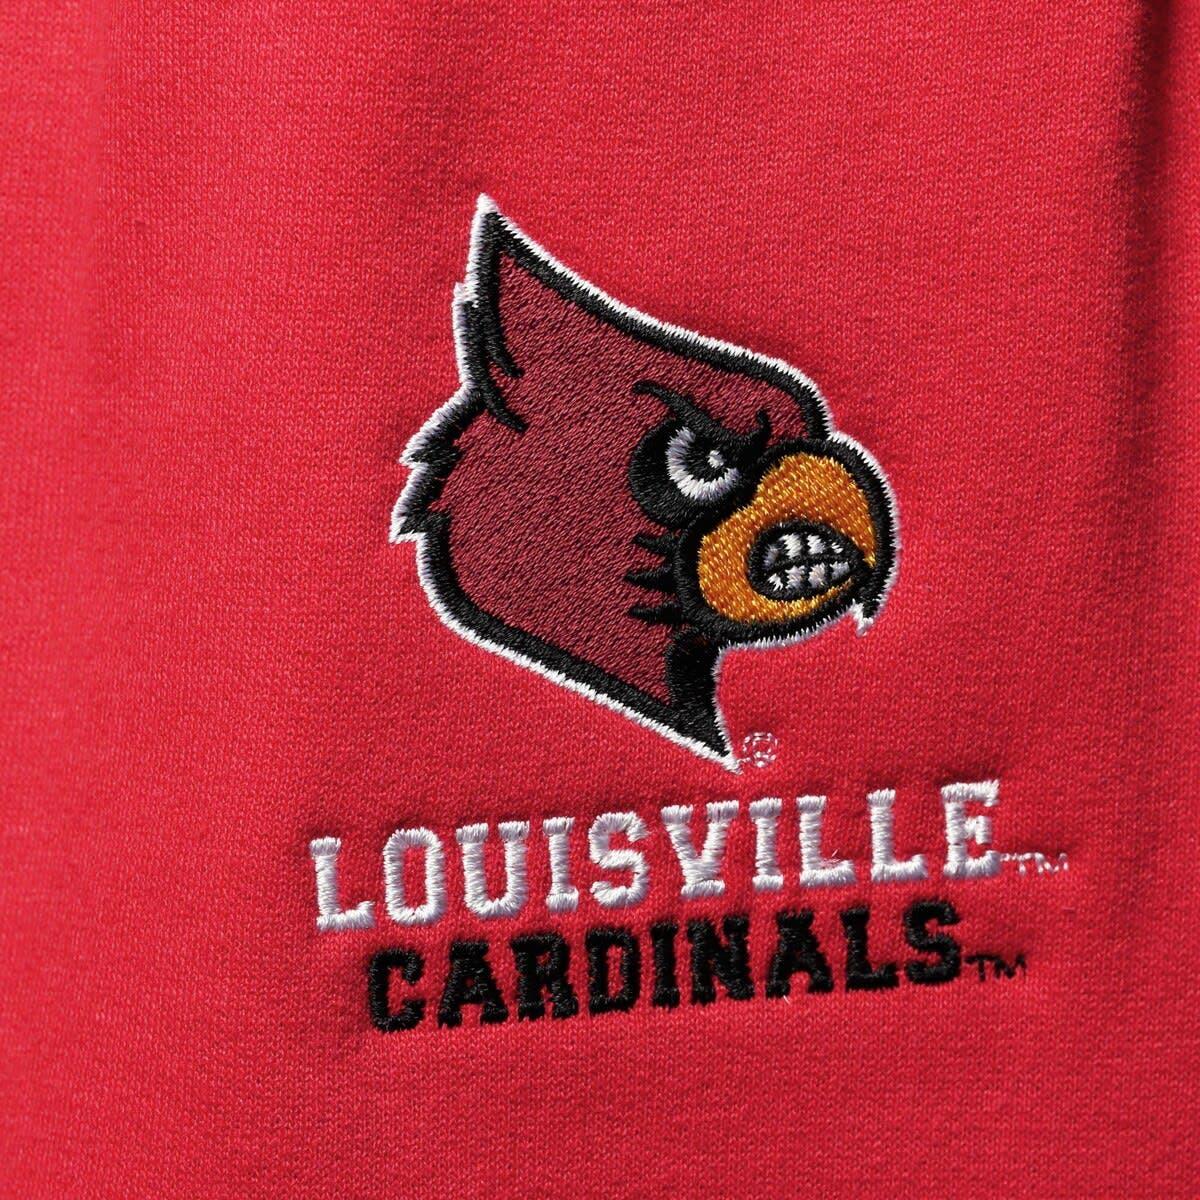 Champion Louisville Cardinals Mens Red Arch Long Sleeve Crew Sweatshirt